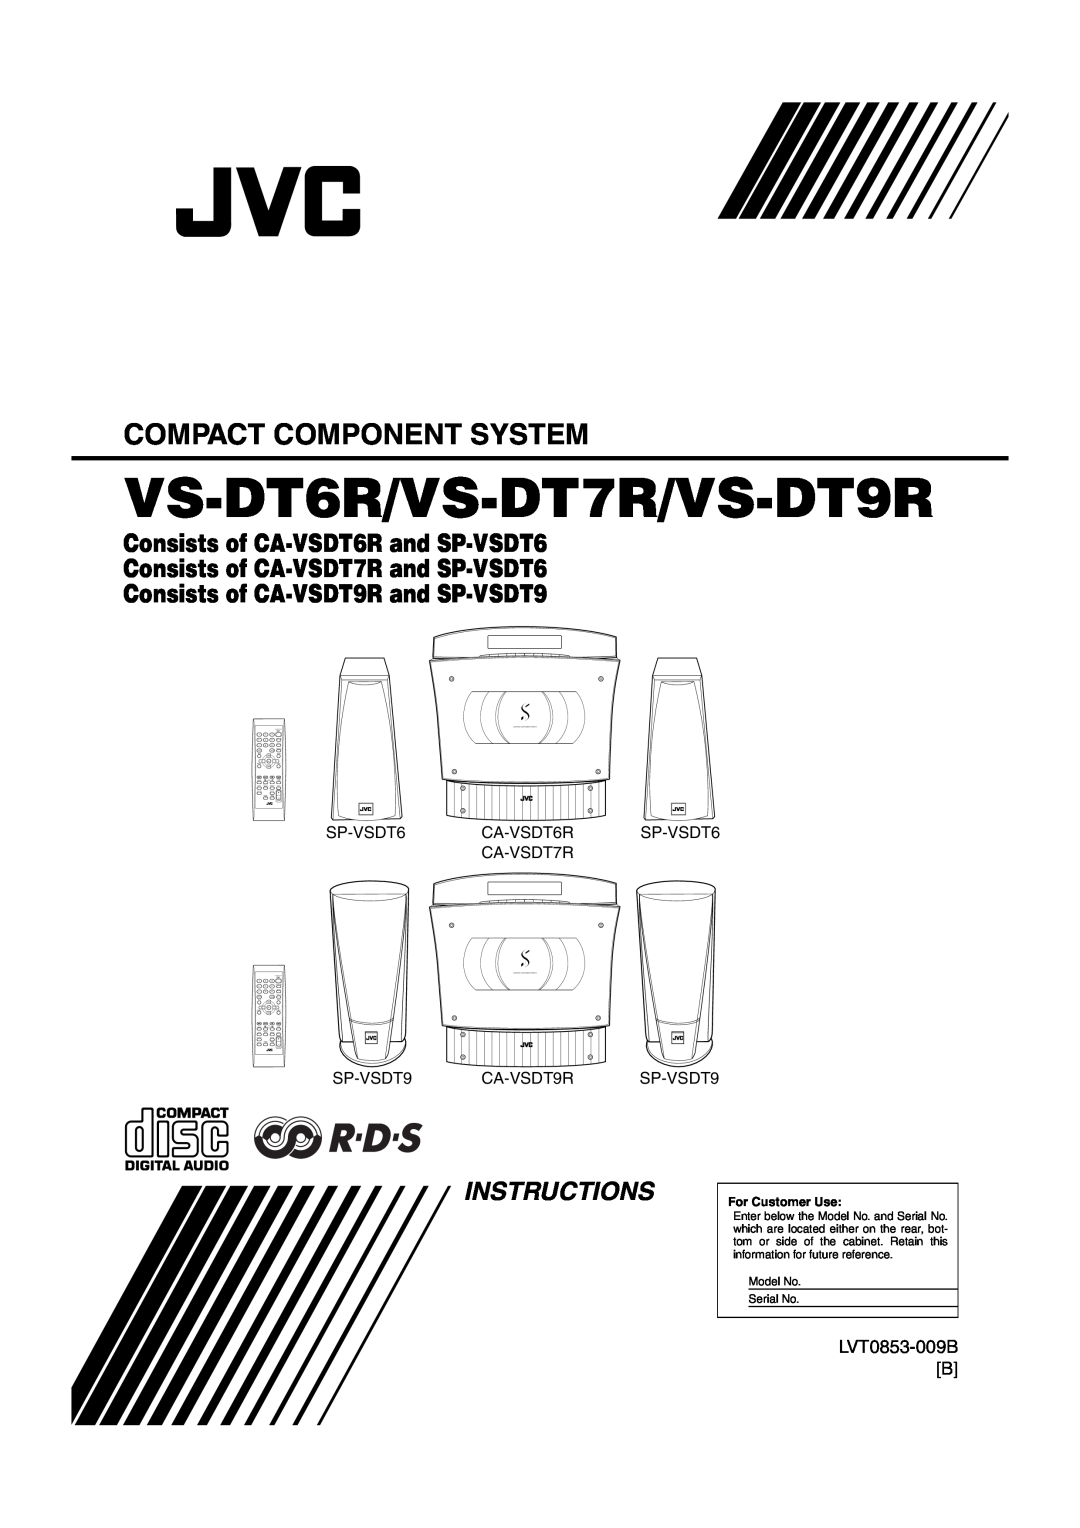 JVC manual VS-DT6R/VS-DT7R/VS-DT9R, Compact Component System, Consists of CA-VSDT6Rand SP-VSDT6, Instructions, Model No 